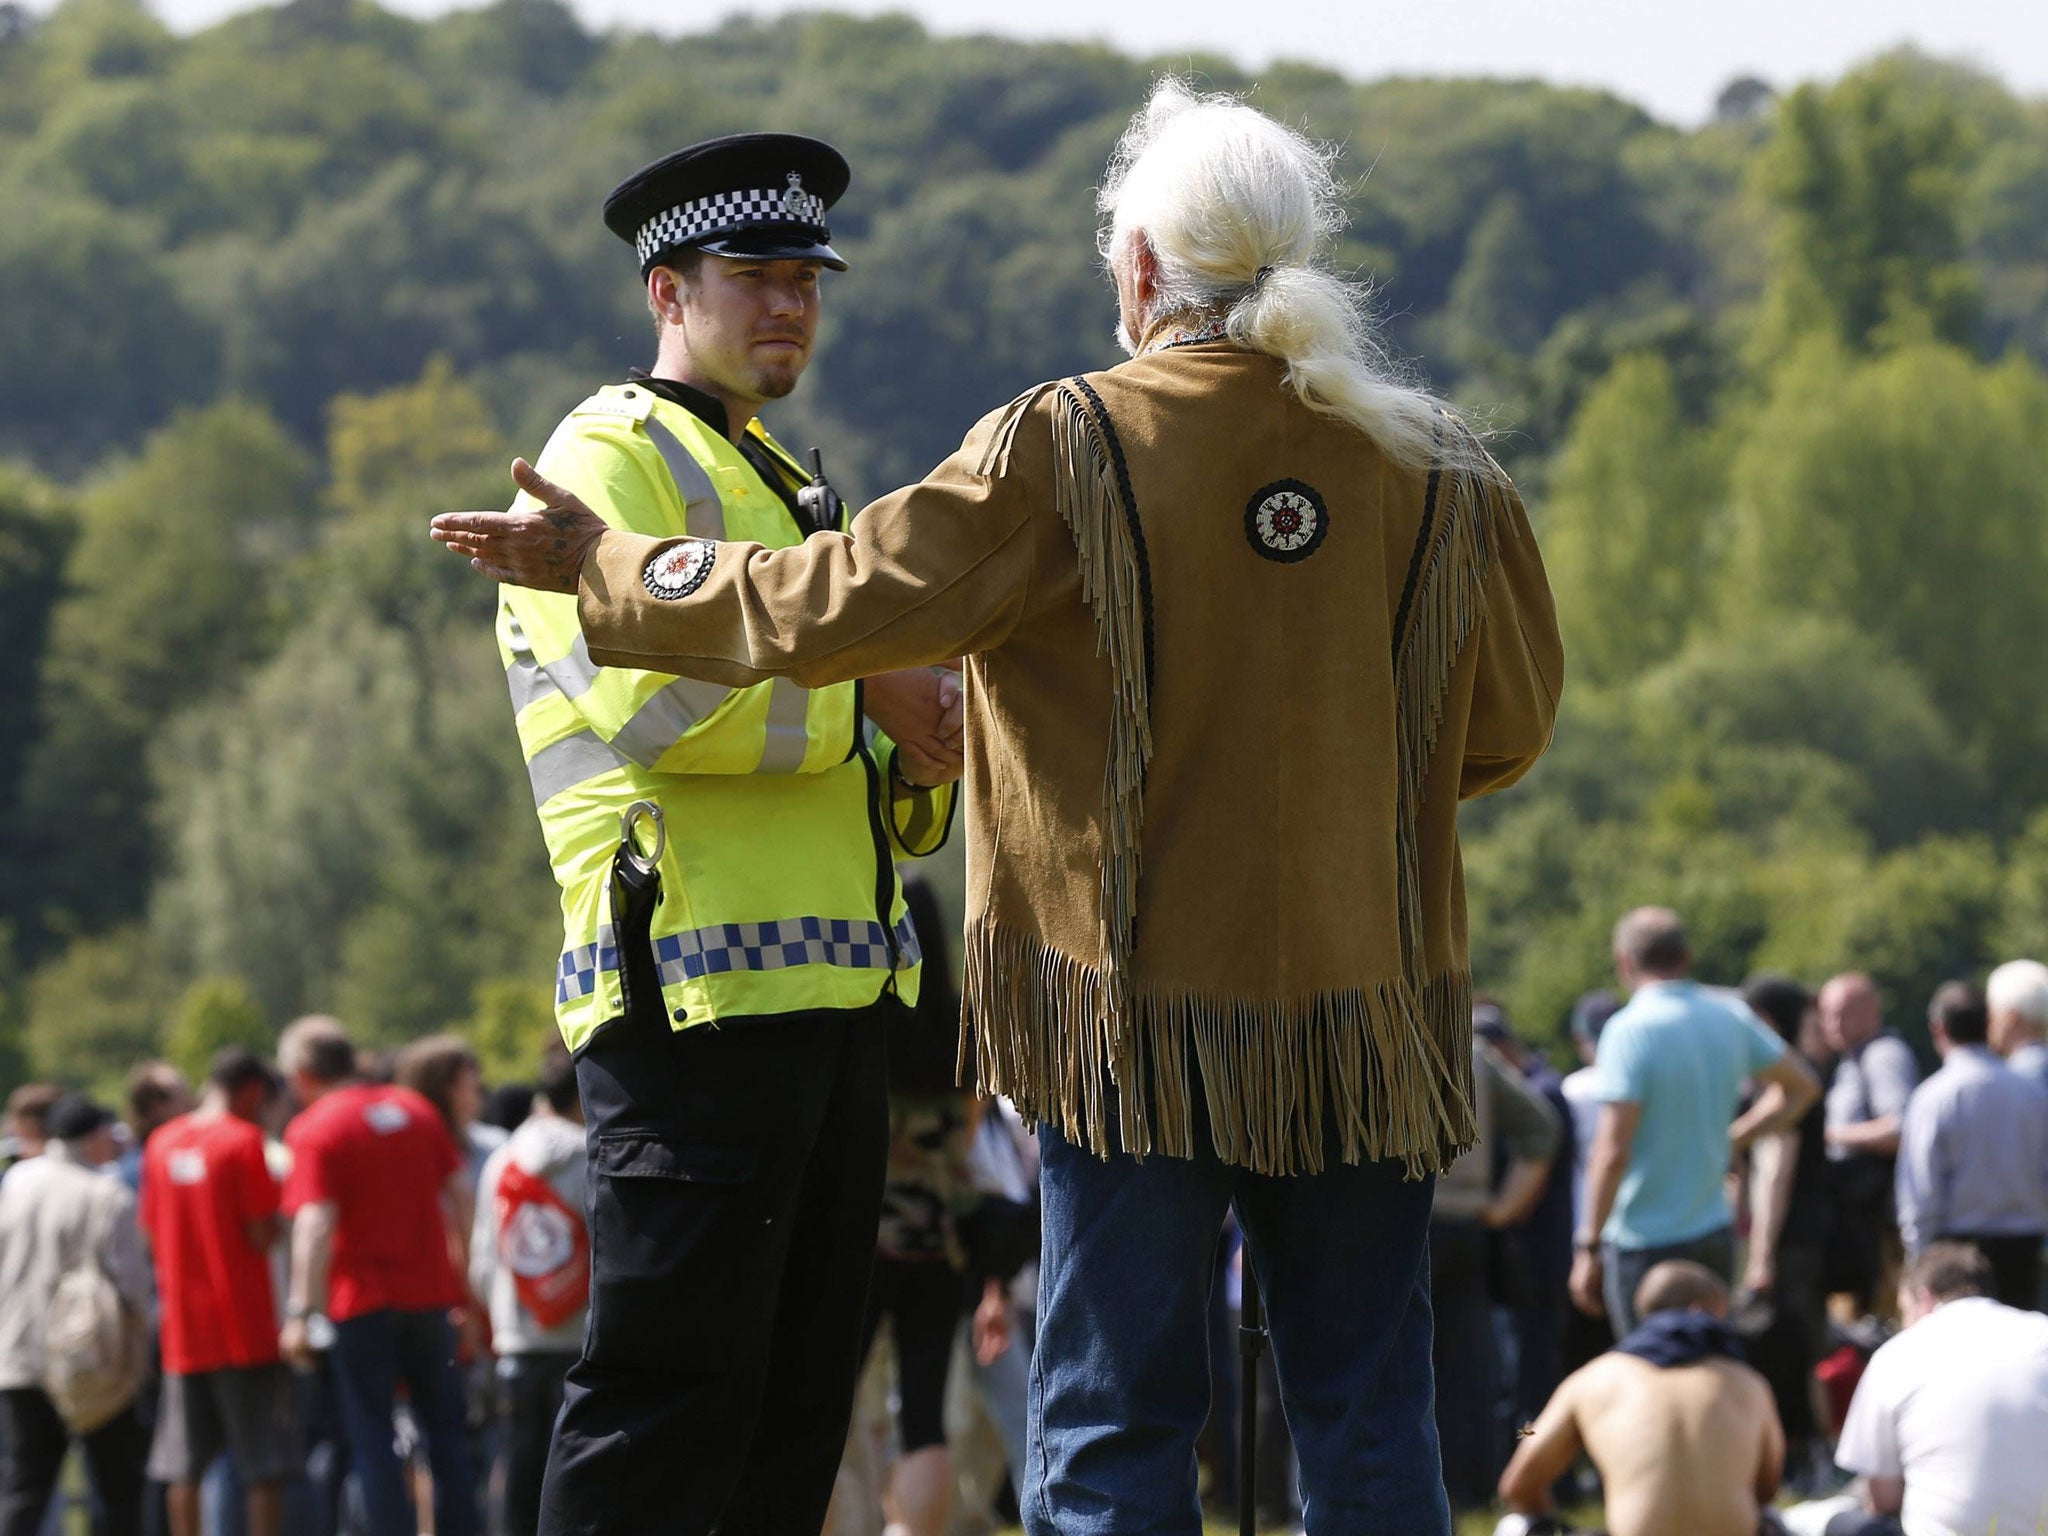 A policeman and a protester outside Bilderberg venue